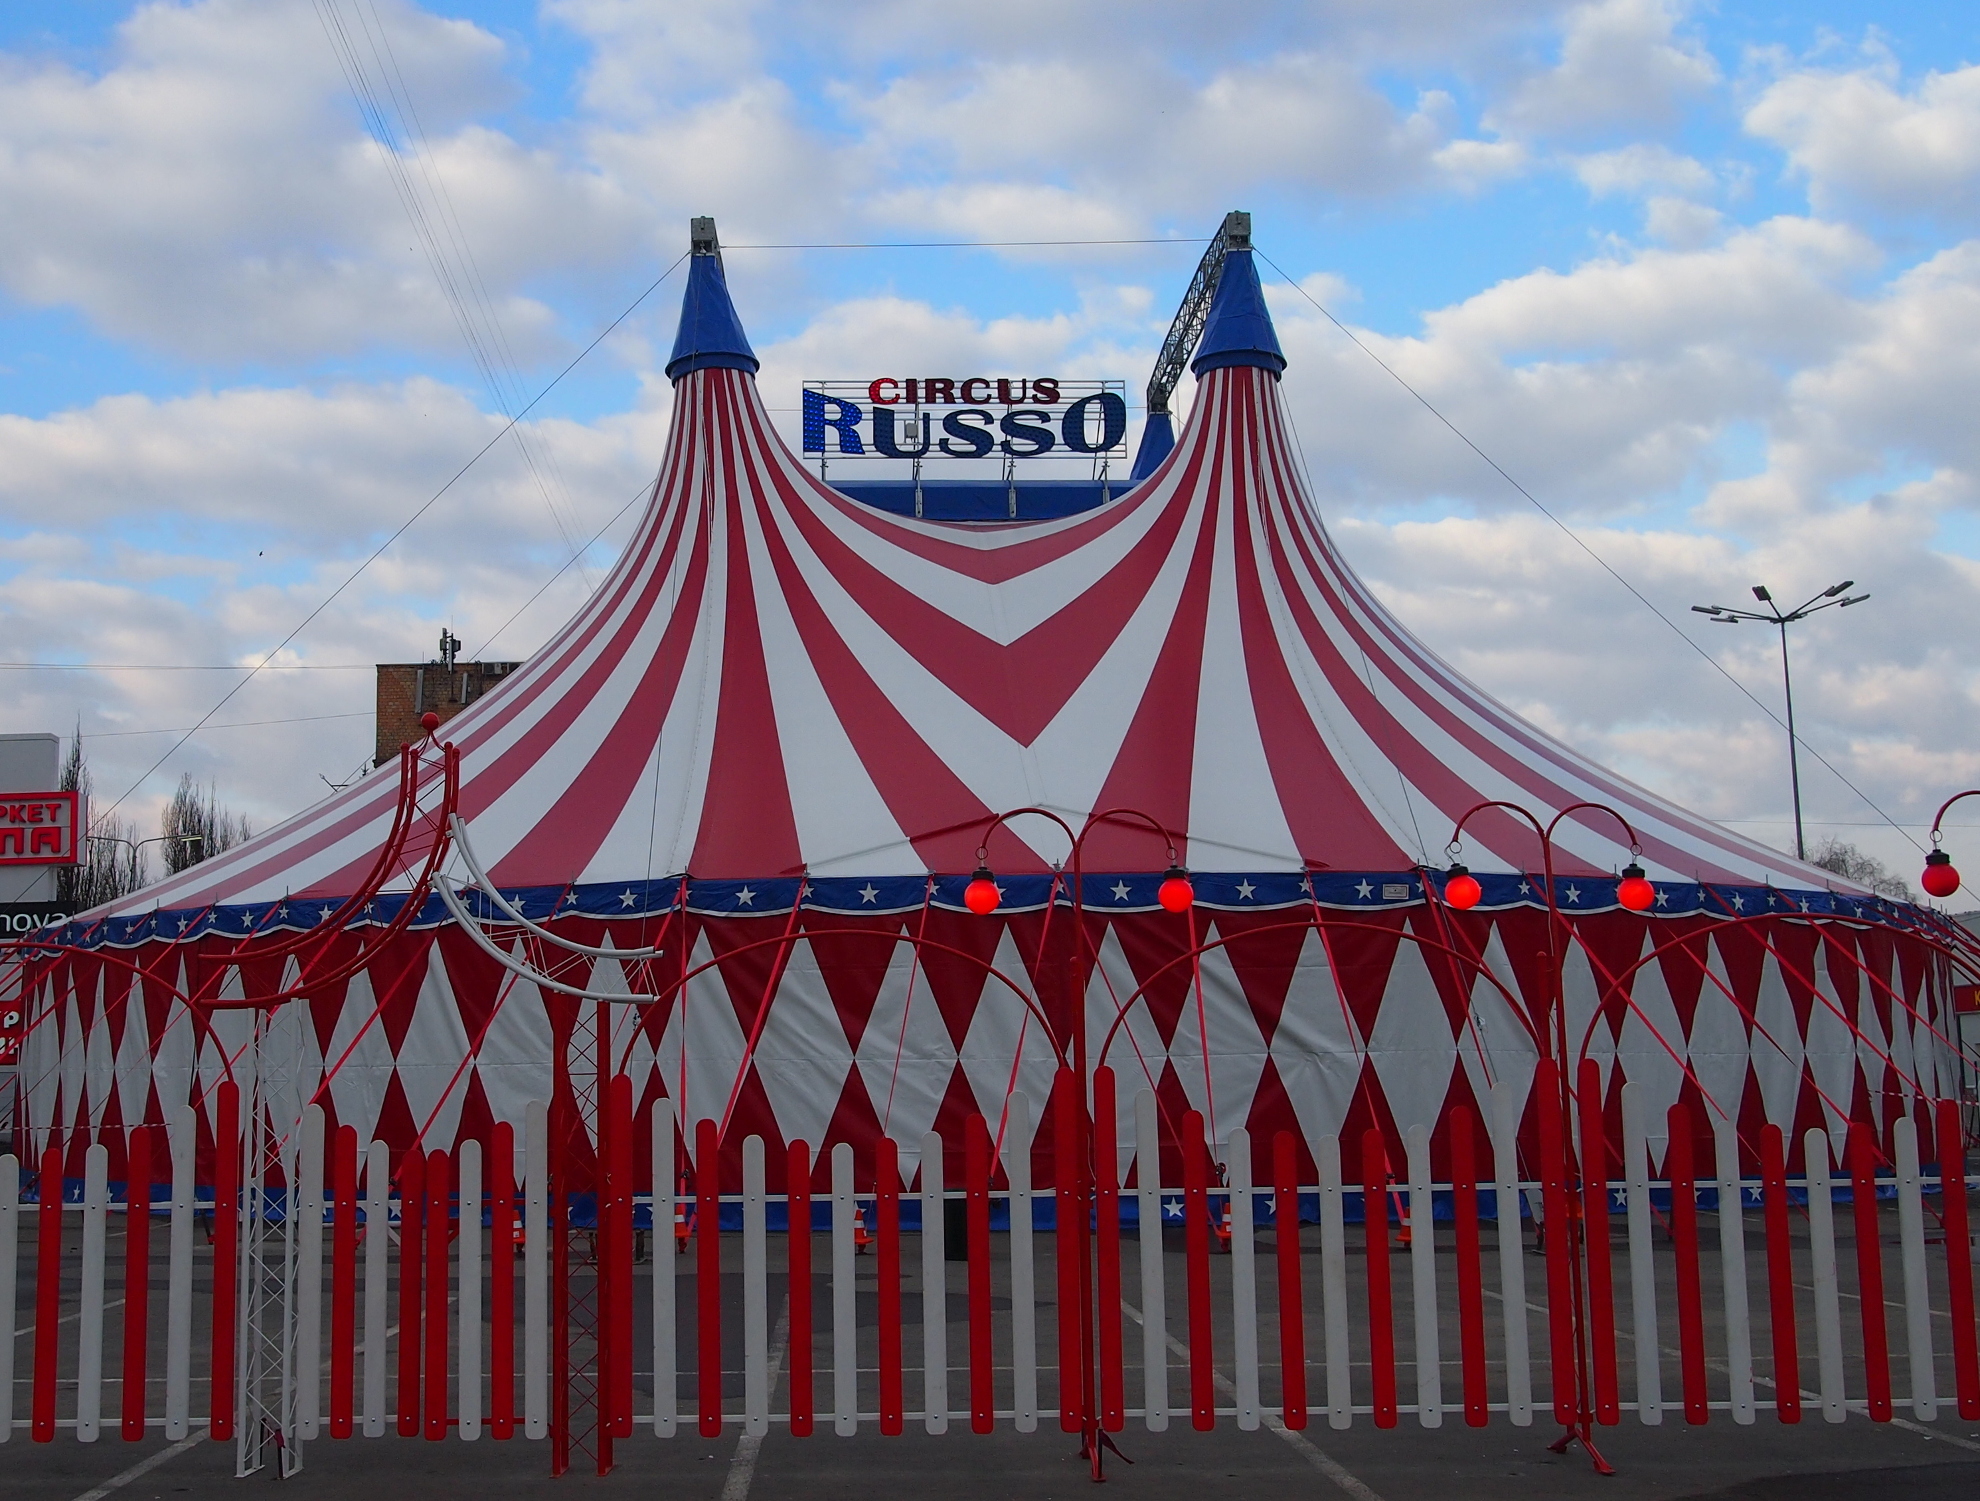 Circus Russo